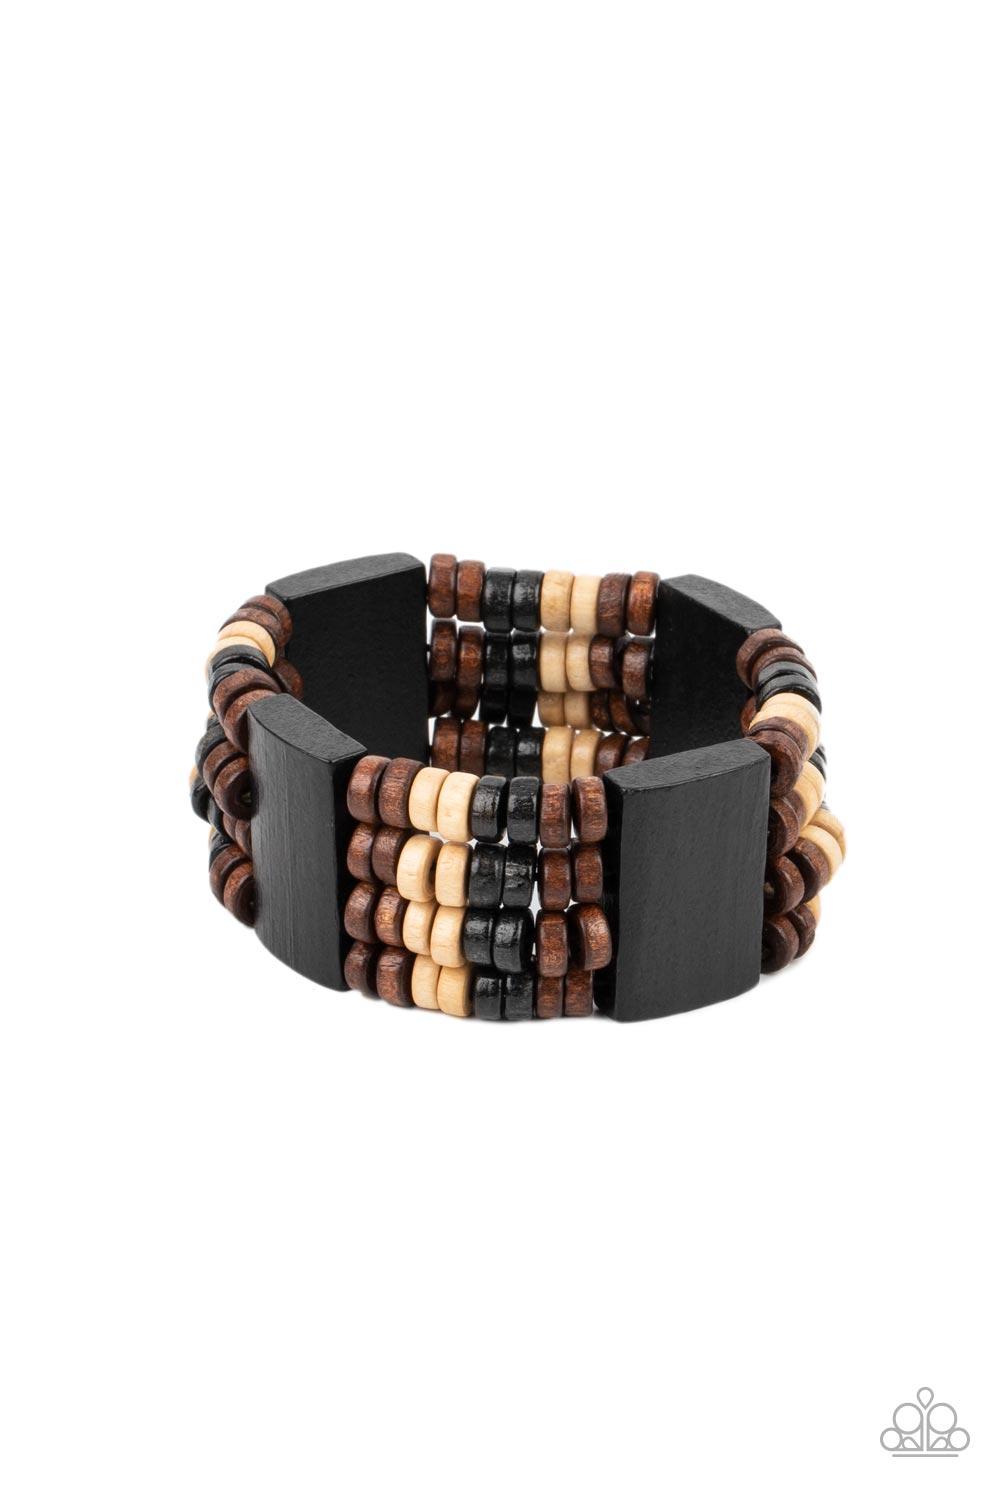 Aruba Attire Black & Brown Wood Bracelet - Paparazzi Accessories- lightbox - CarasShop.com - $5 Jewelry by Cara Jewels